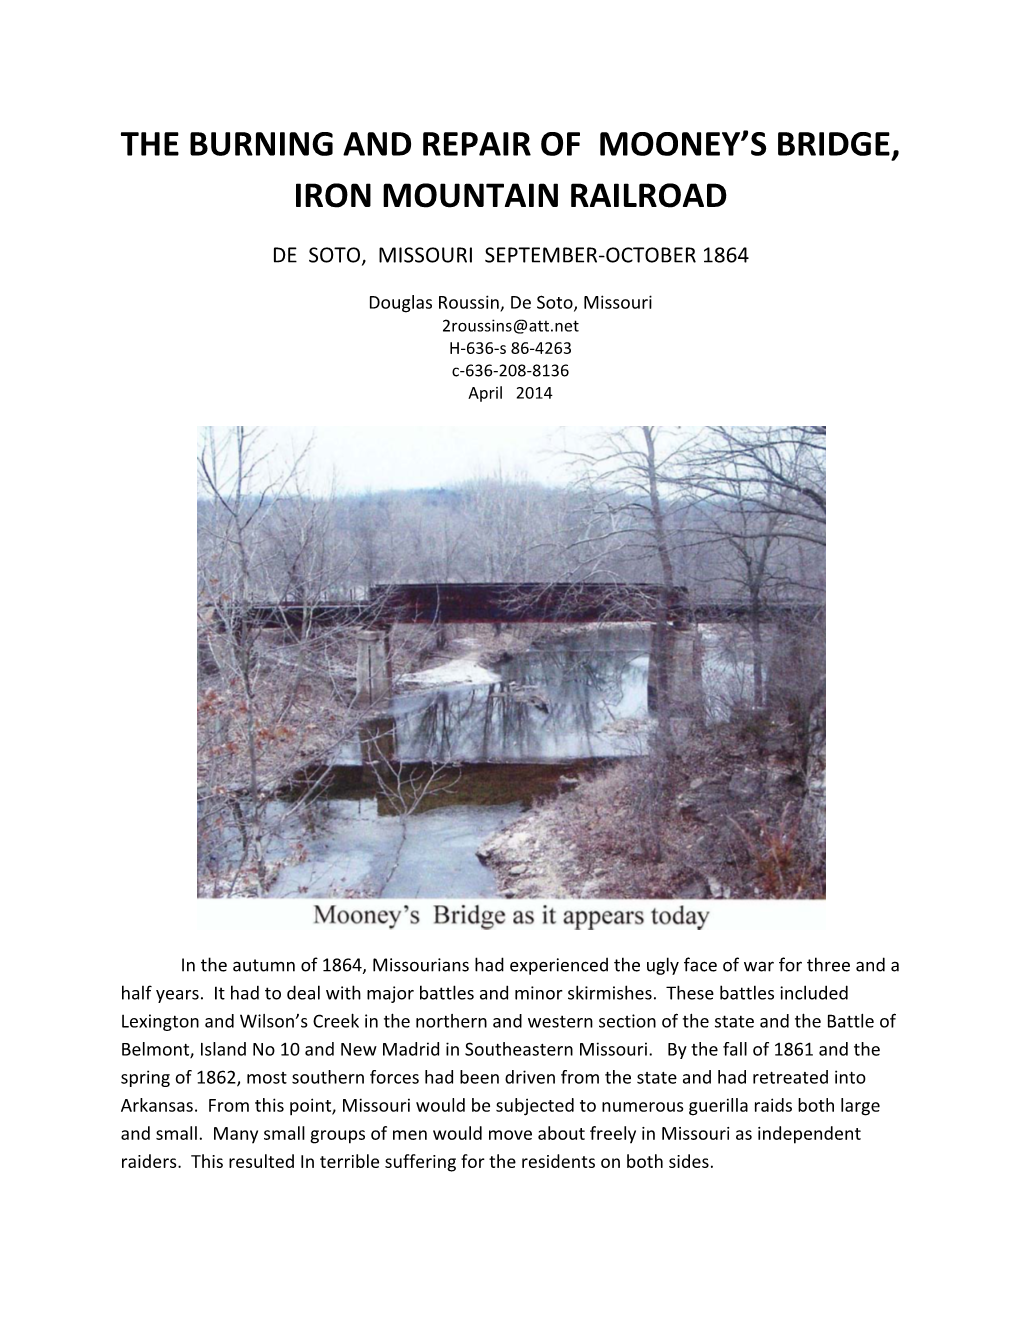 The Burning and Repair of Mooney's Bridge, Iron